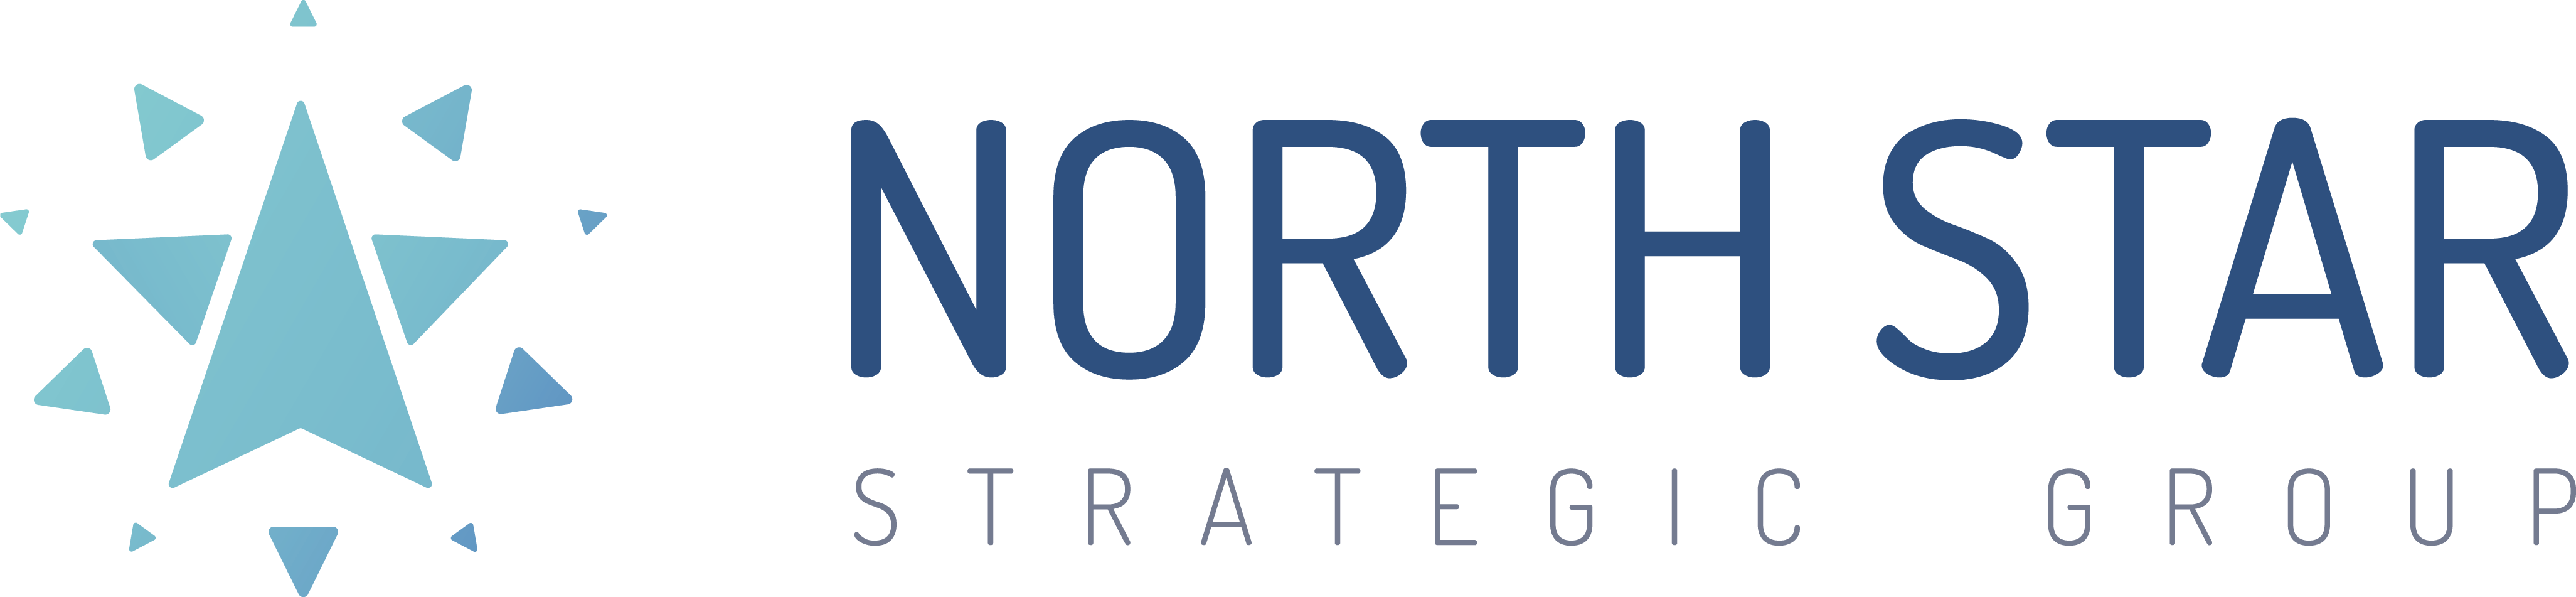 North Star Strategic Group's Logo